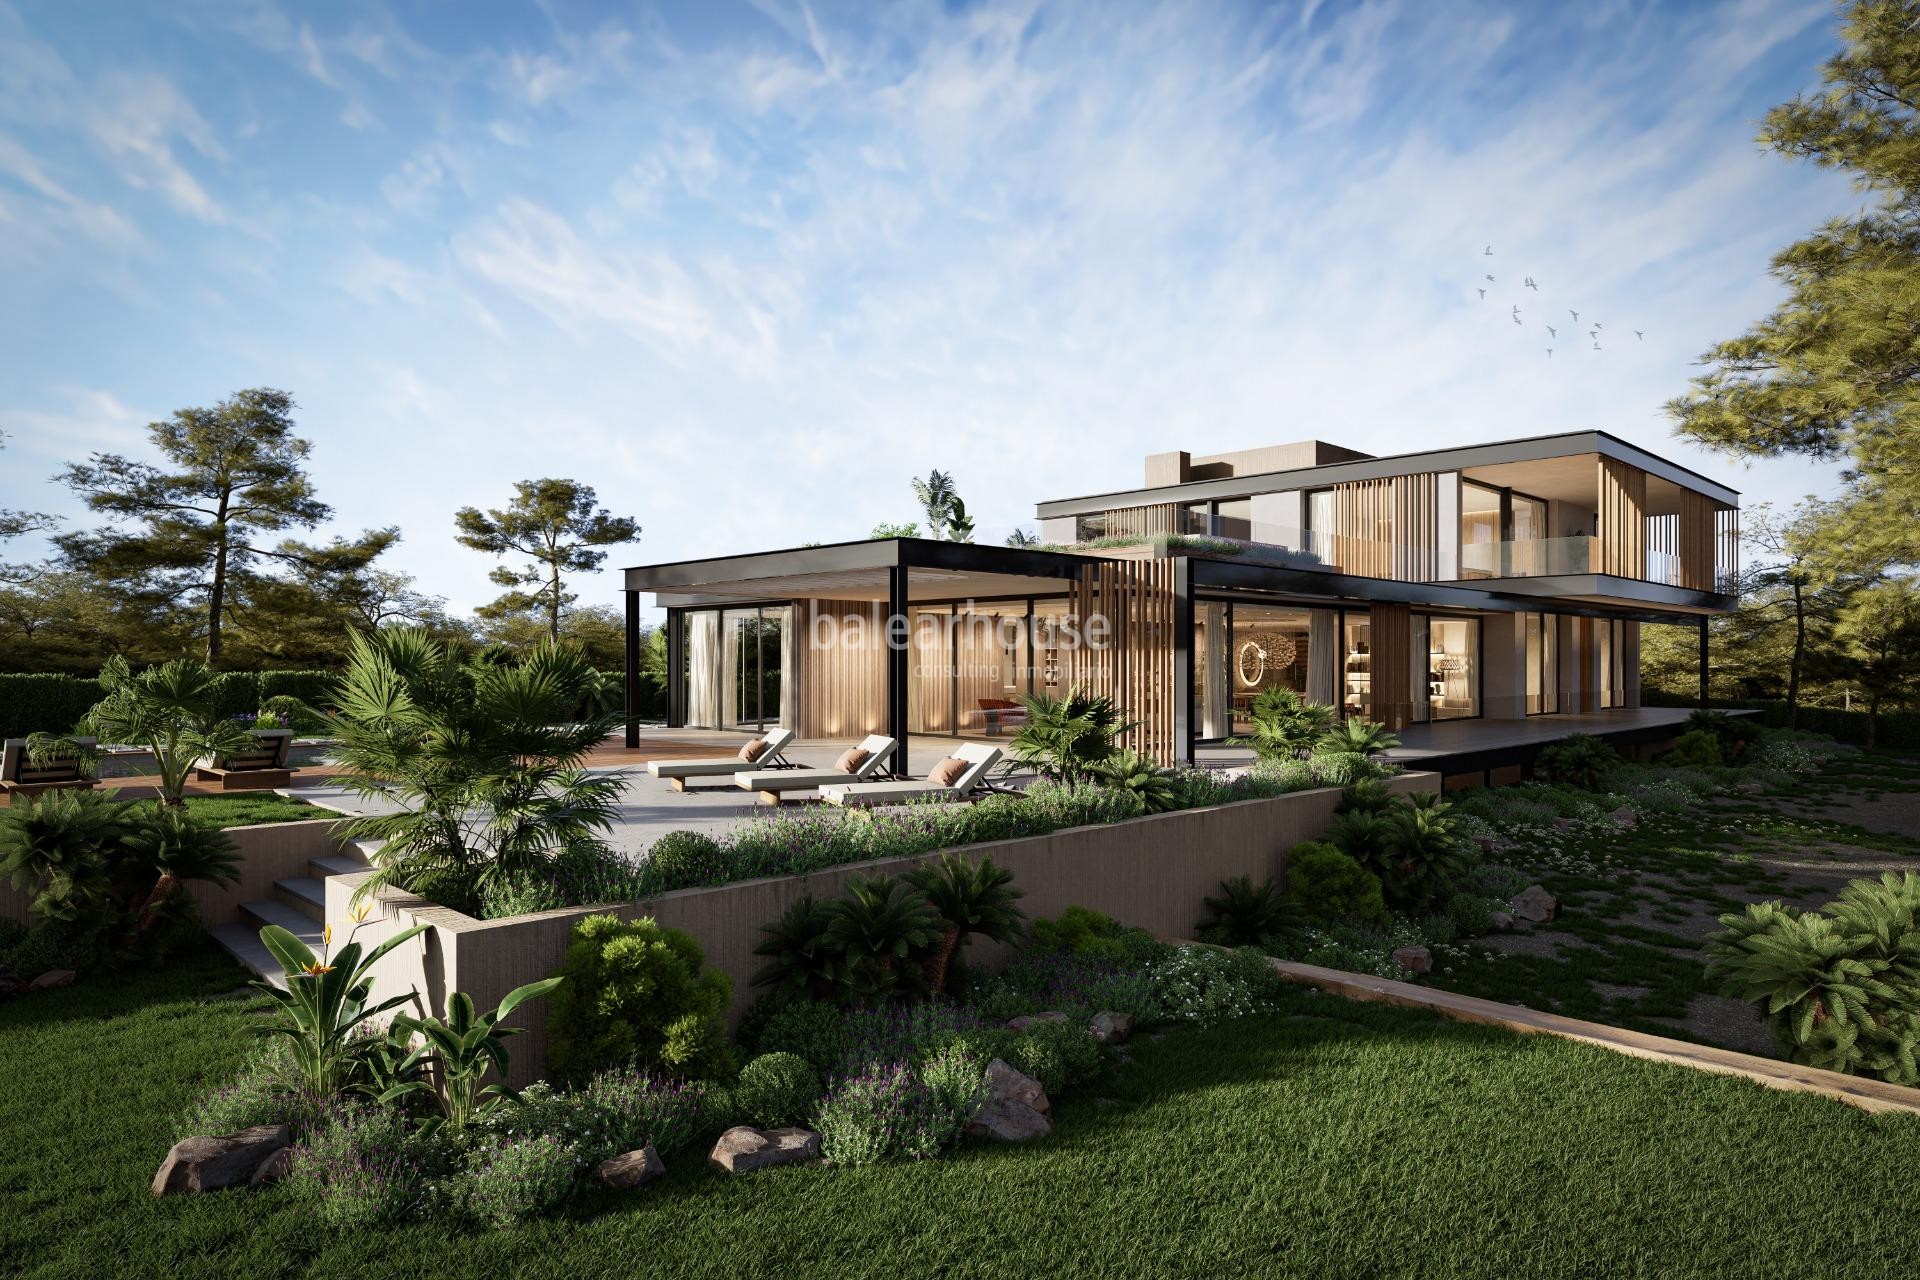 Gran terreno en la excelente zona de Sol de Mallorca con proyecto de espectacular villa moderna.